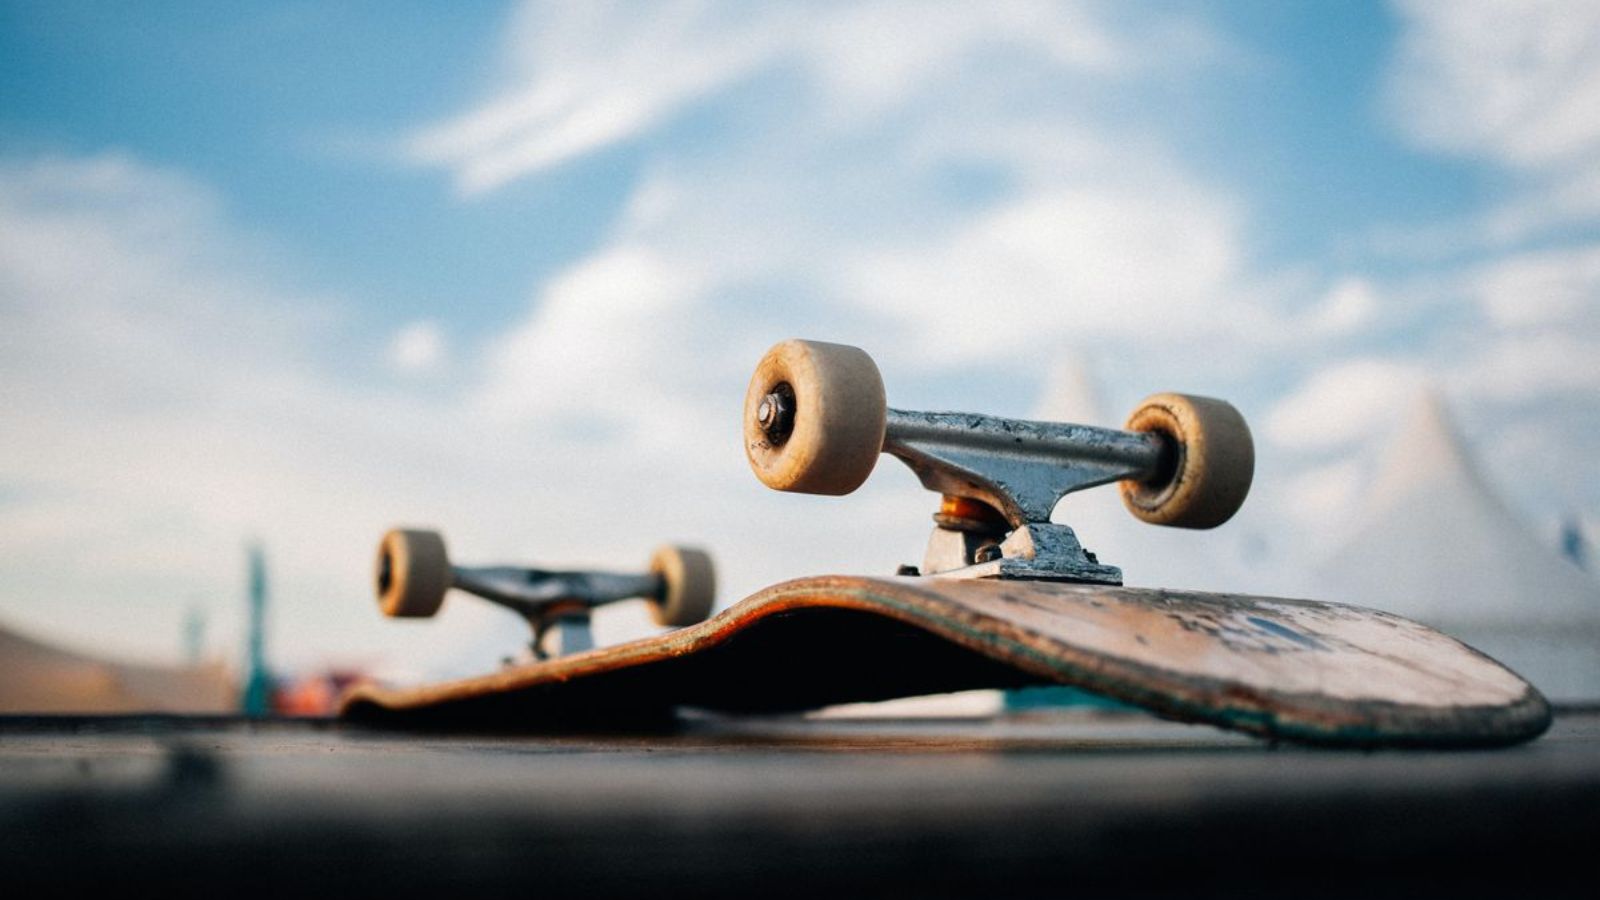  Skateboard Wheels Tight Or Loose 